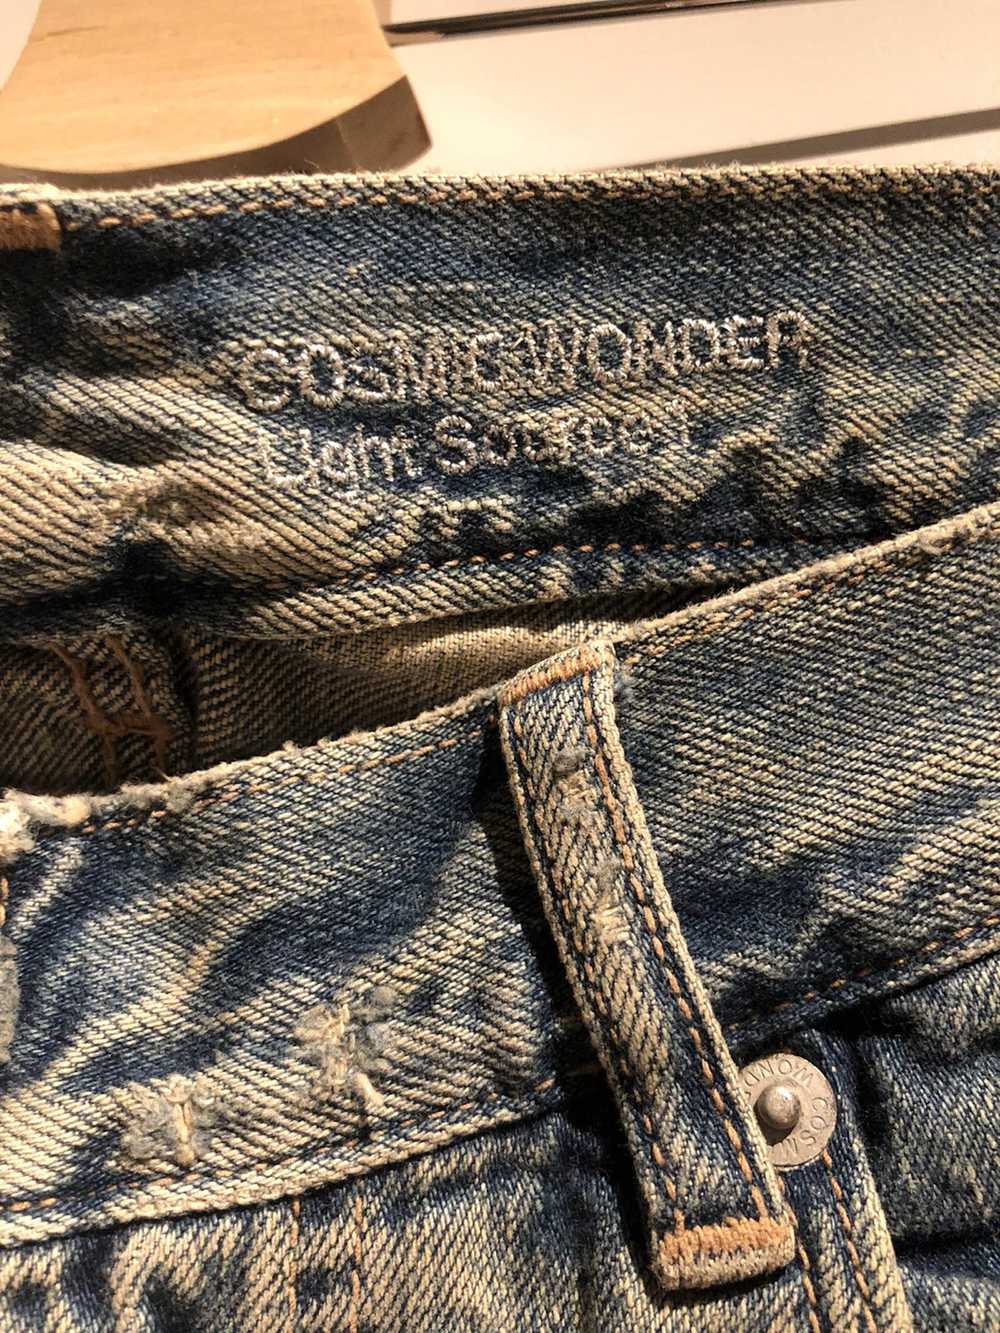 Cosmic Wonder Cosmic wonder light source jeans - image 4